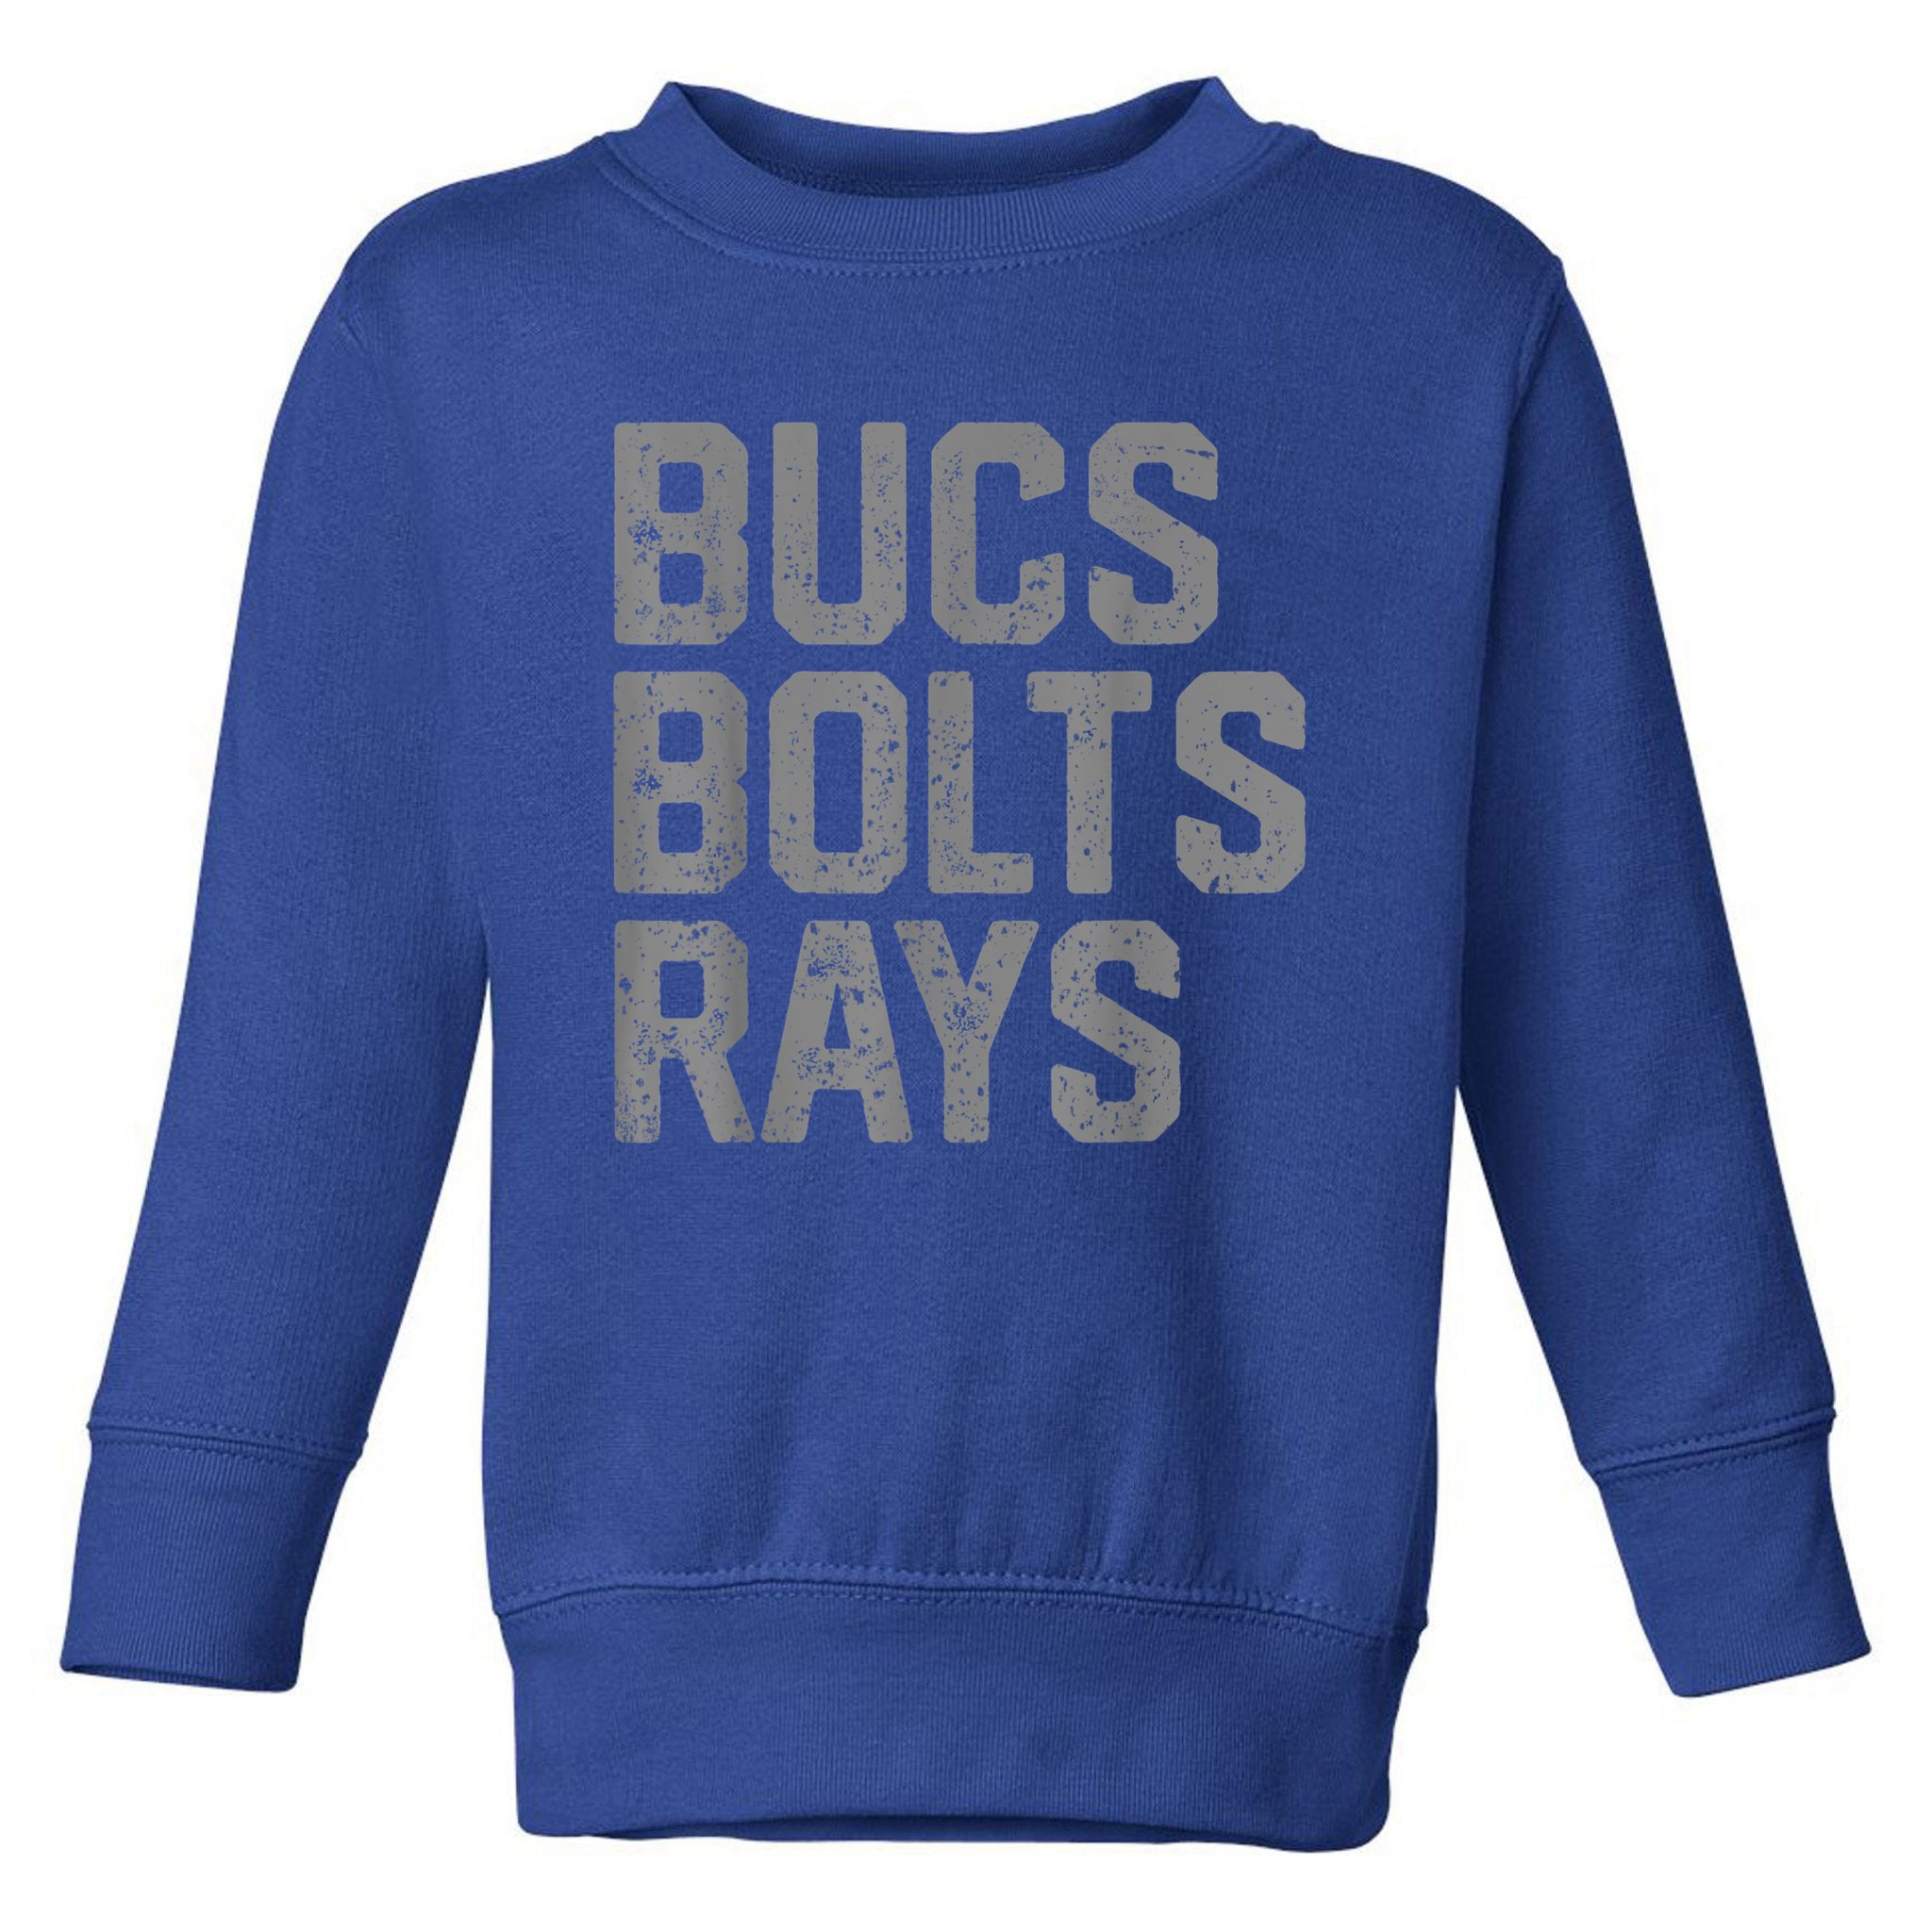 Bucs Bolts Rays Toddler Sweatshirt